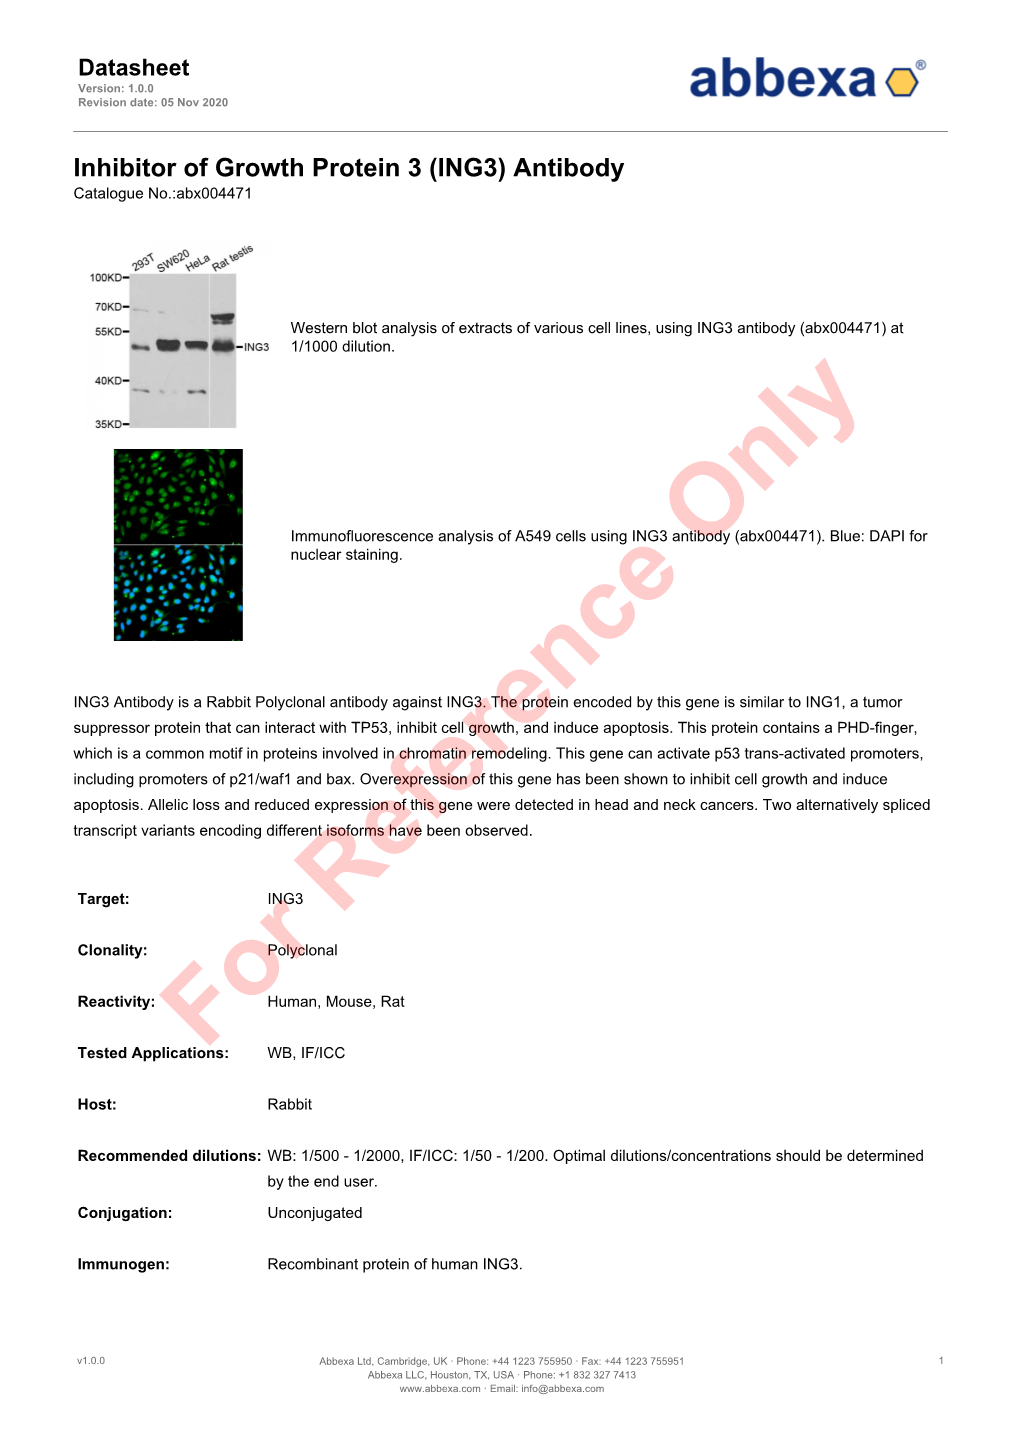 ING3) Antibody Catalogue No.:Abx004471